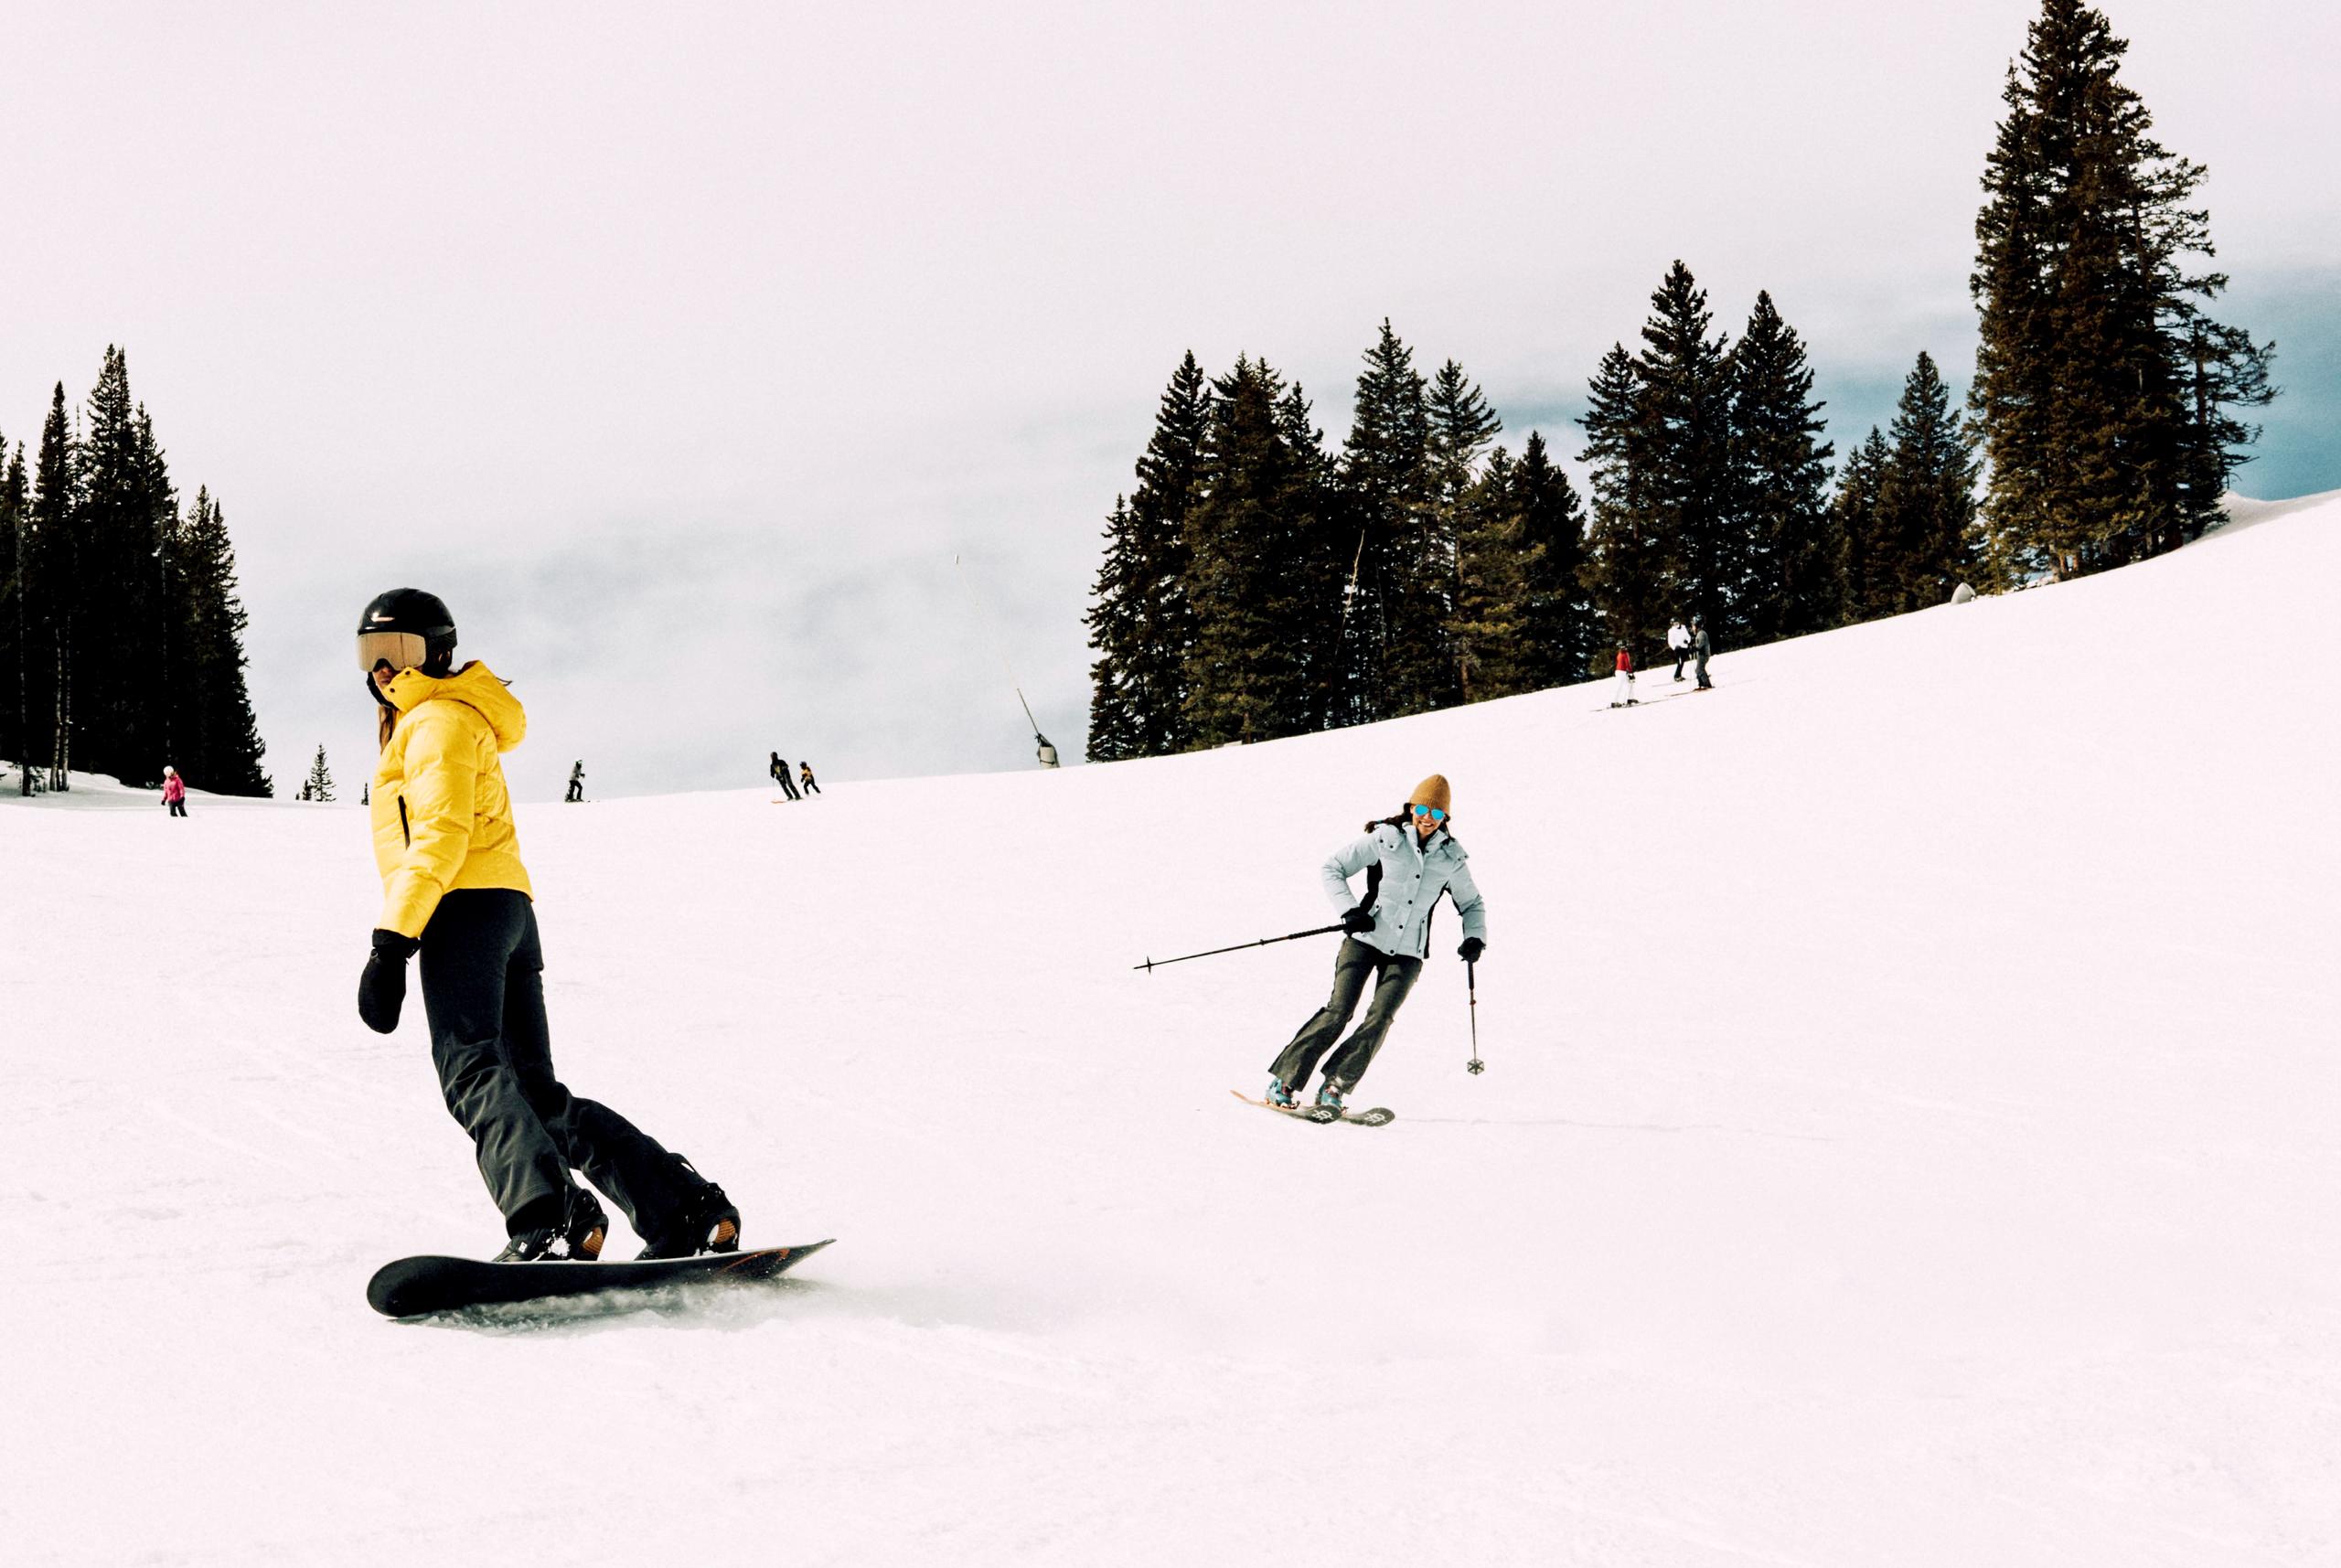 Women in W Torino Jacket skiing down hill